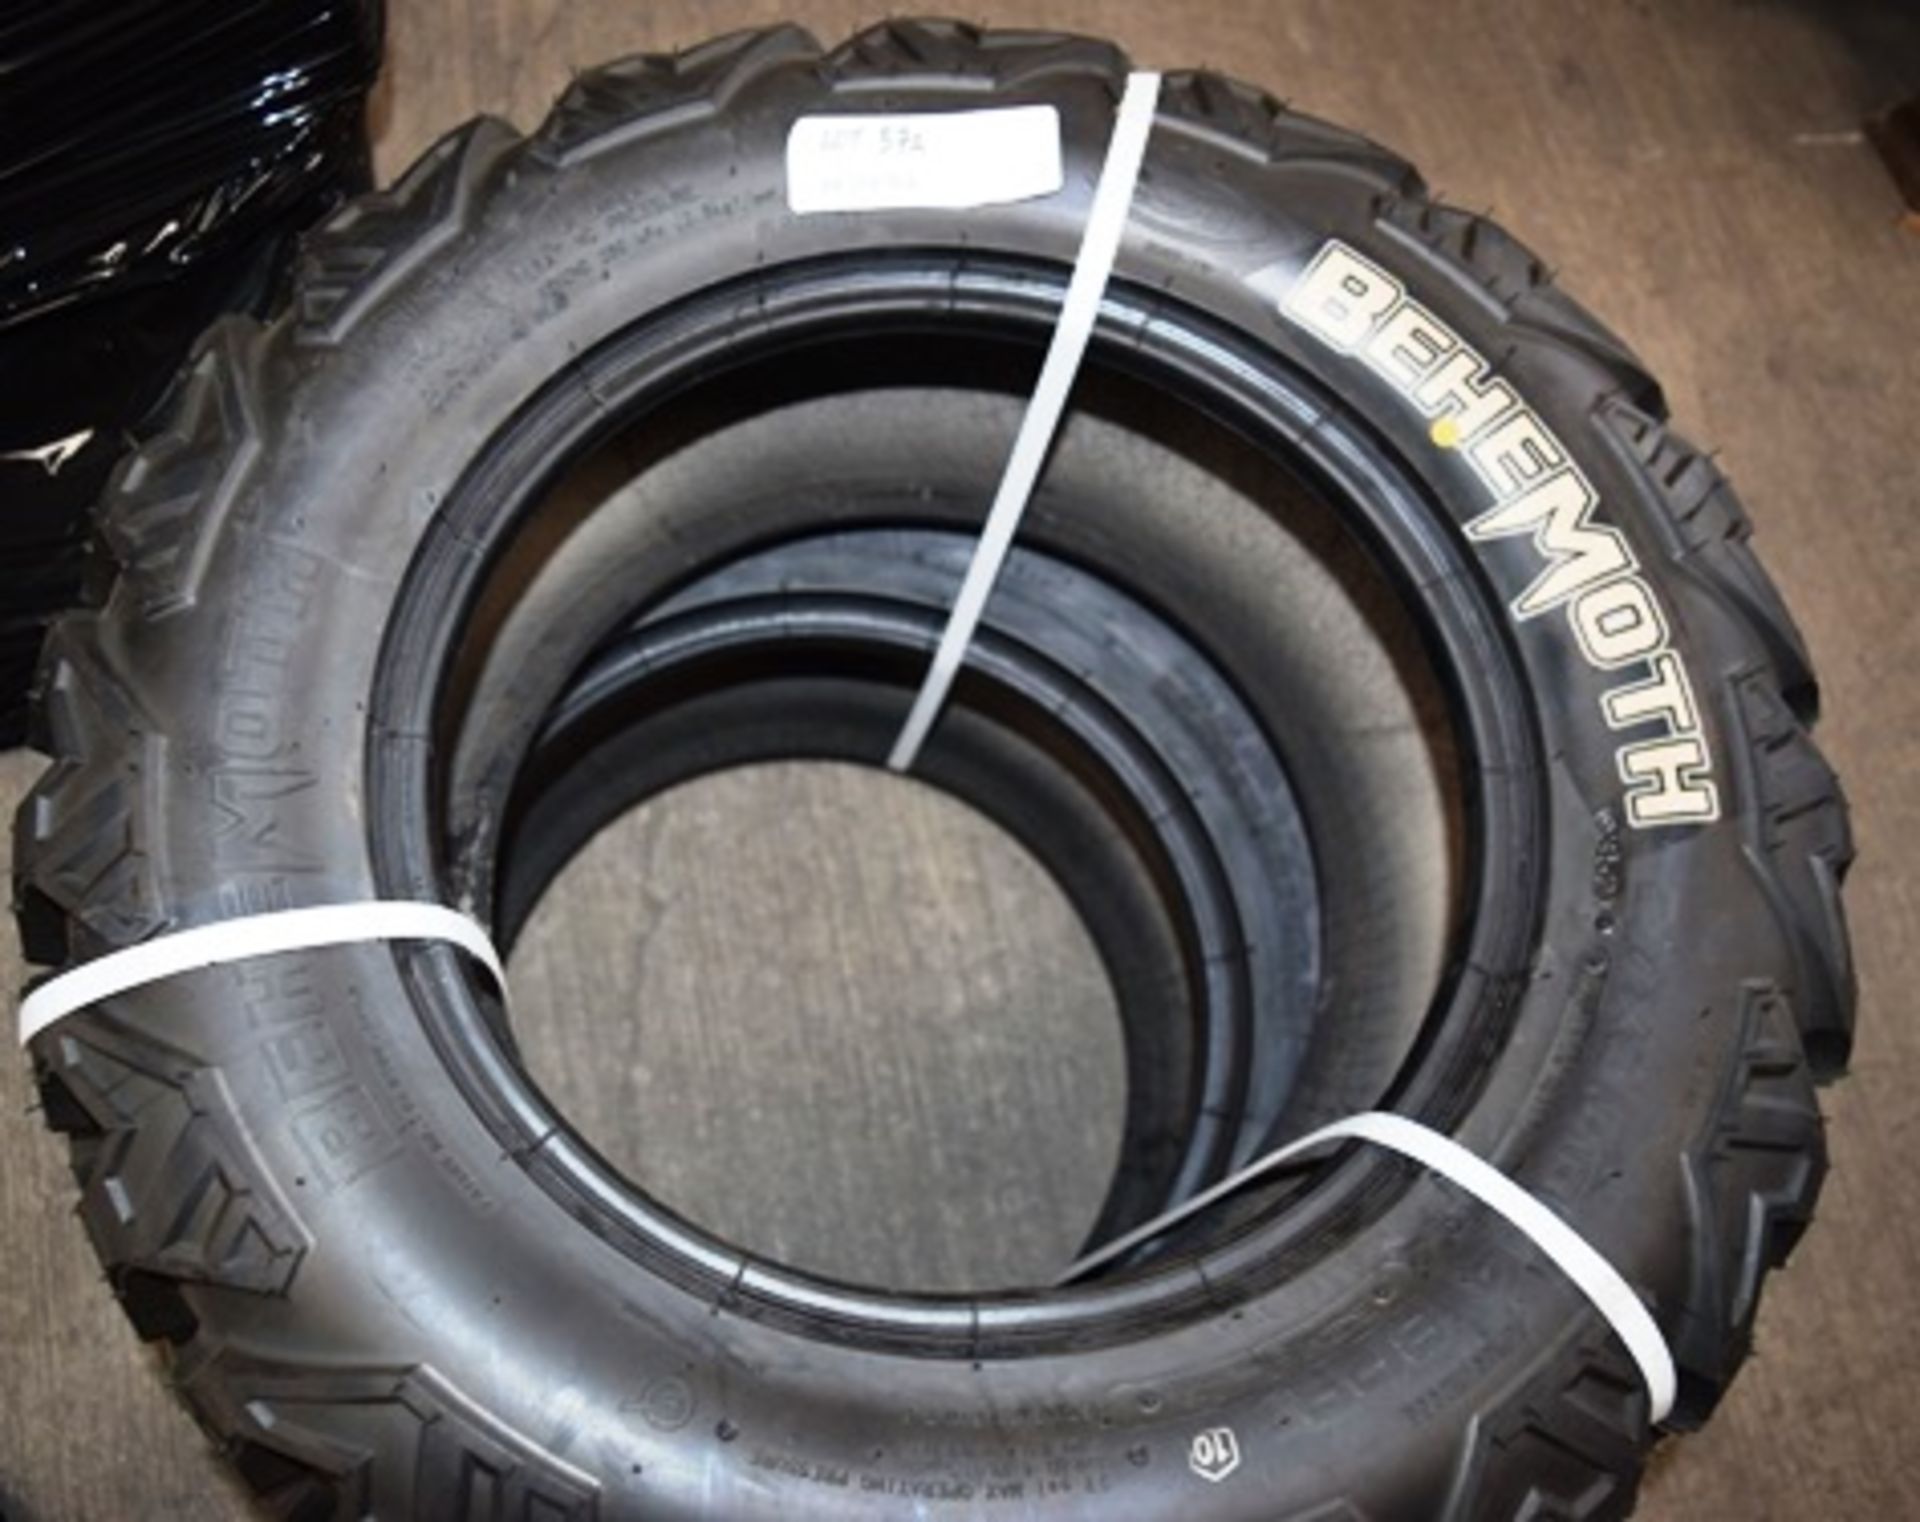 2 x Behemoth tyres, size 27 x 9.00 R14 8PR - New (GS8)